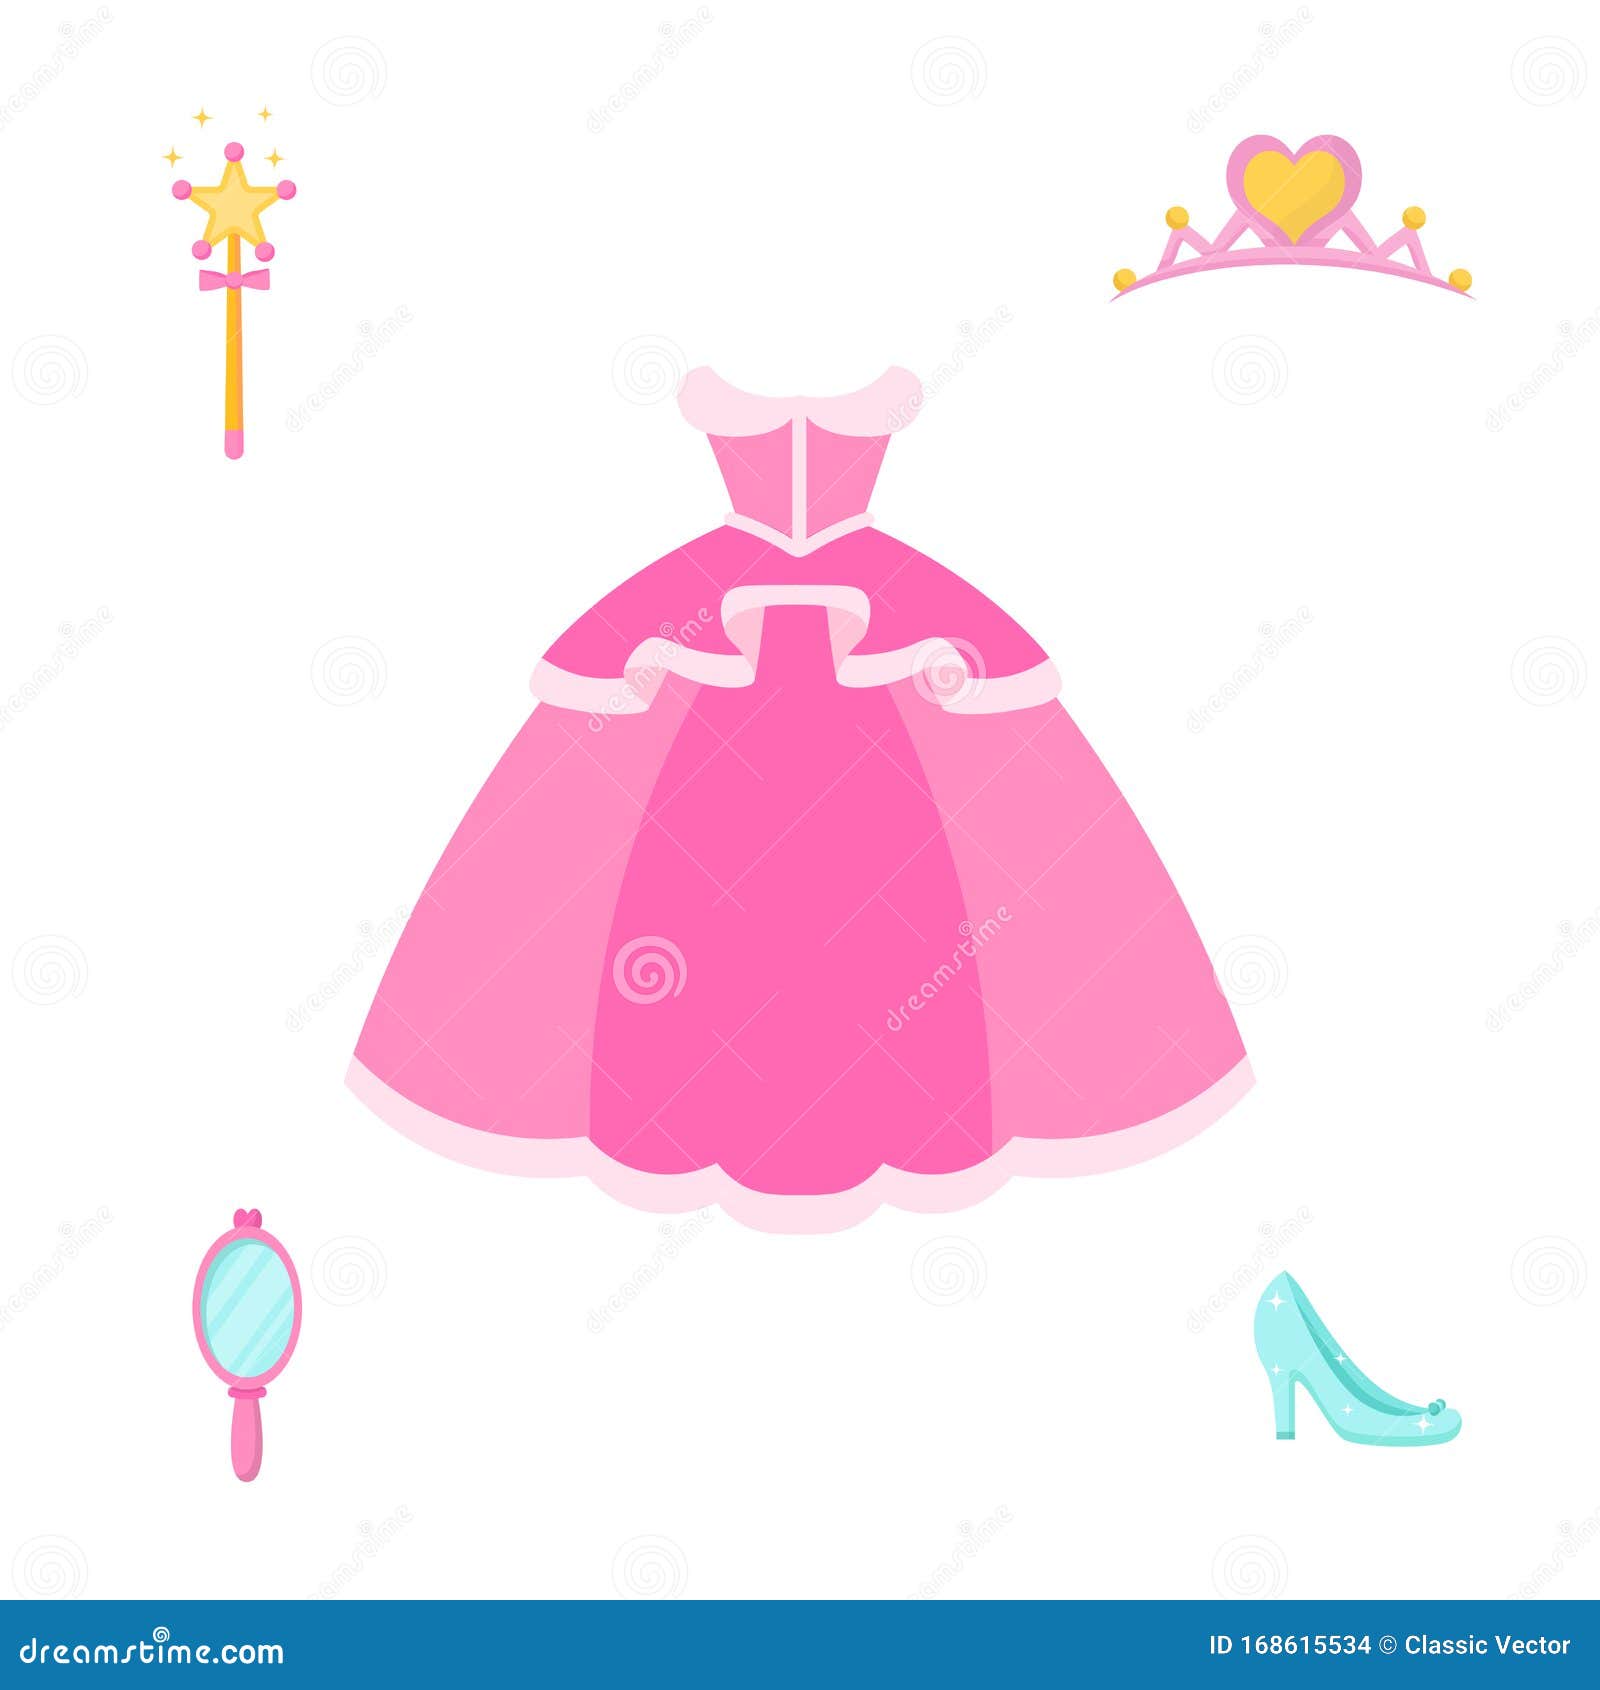 Princess Accessories Vector Illustrations Set Stock Vector ...